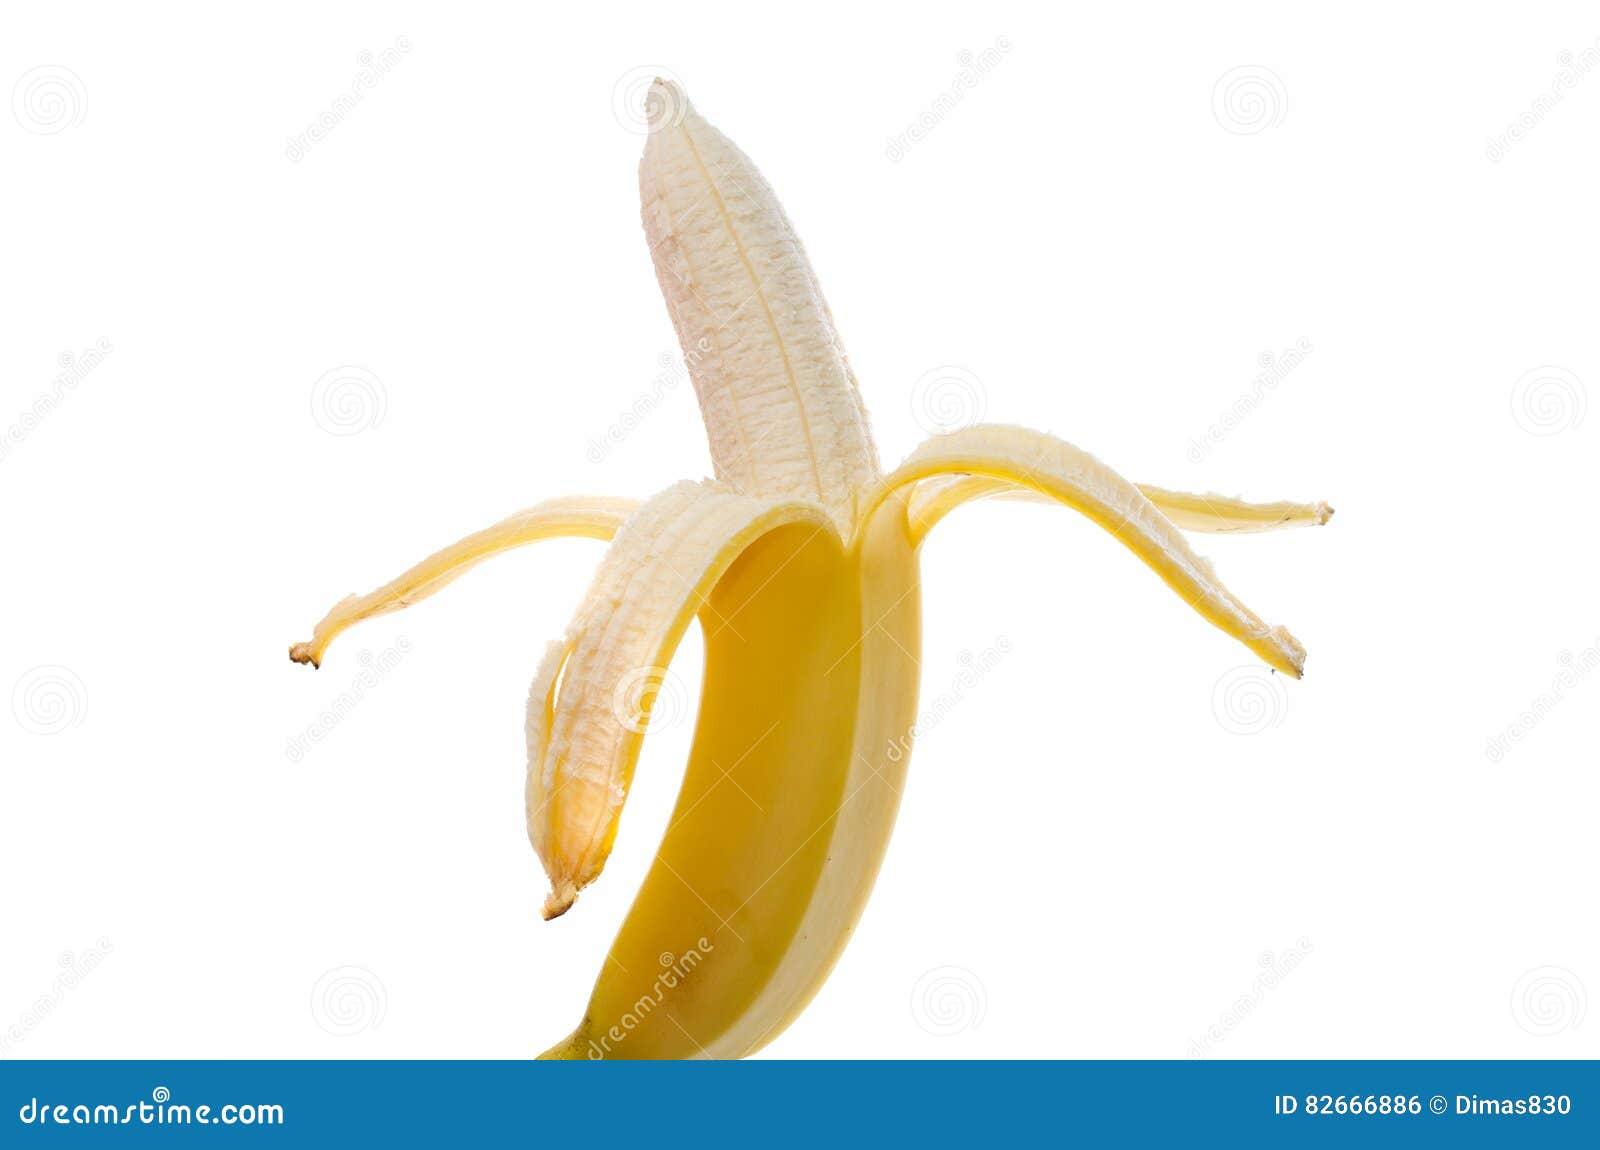 Сколько весит банан без кожуры в среднем. Банан без кожуры. Фото банана без кожуры на белом фоне. Банан без рук. Вес мини банана без кожуры.